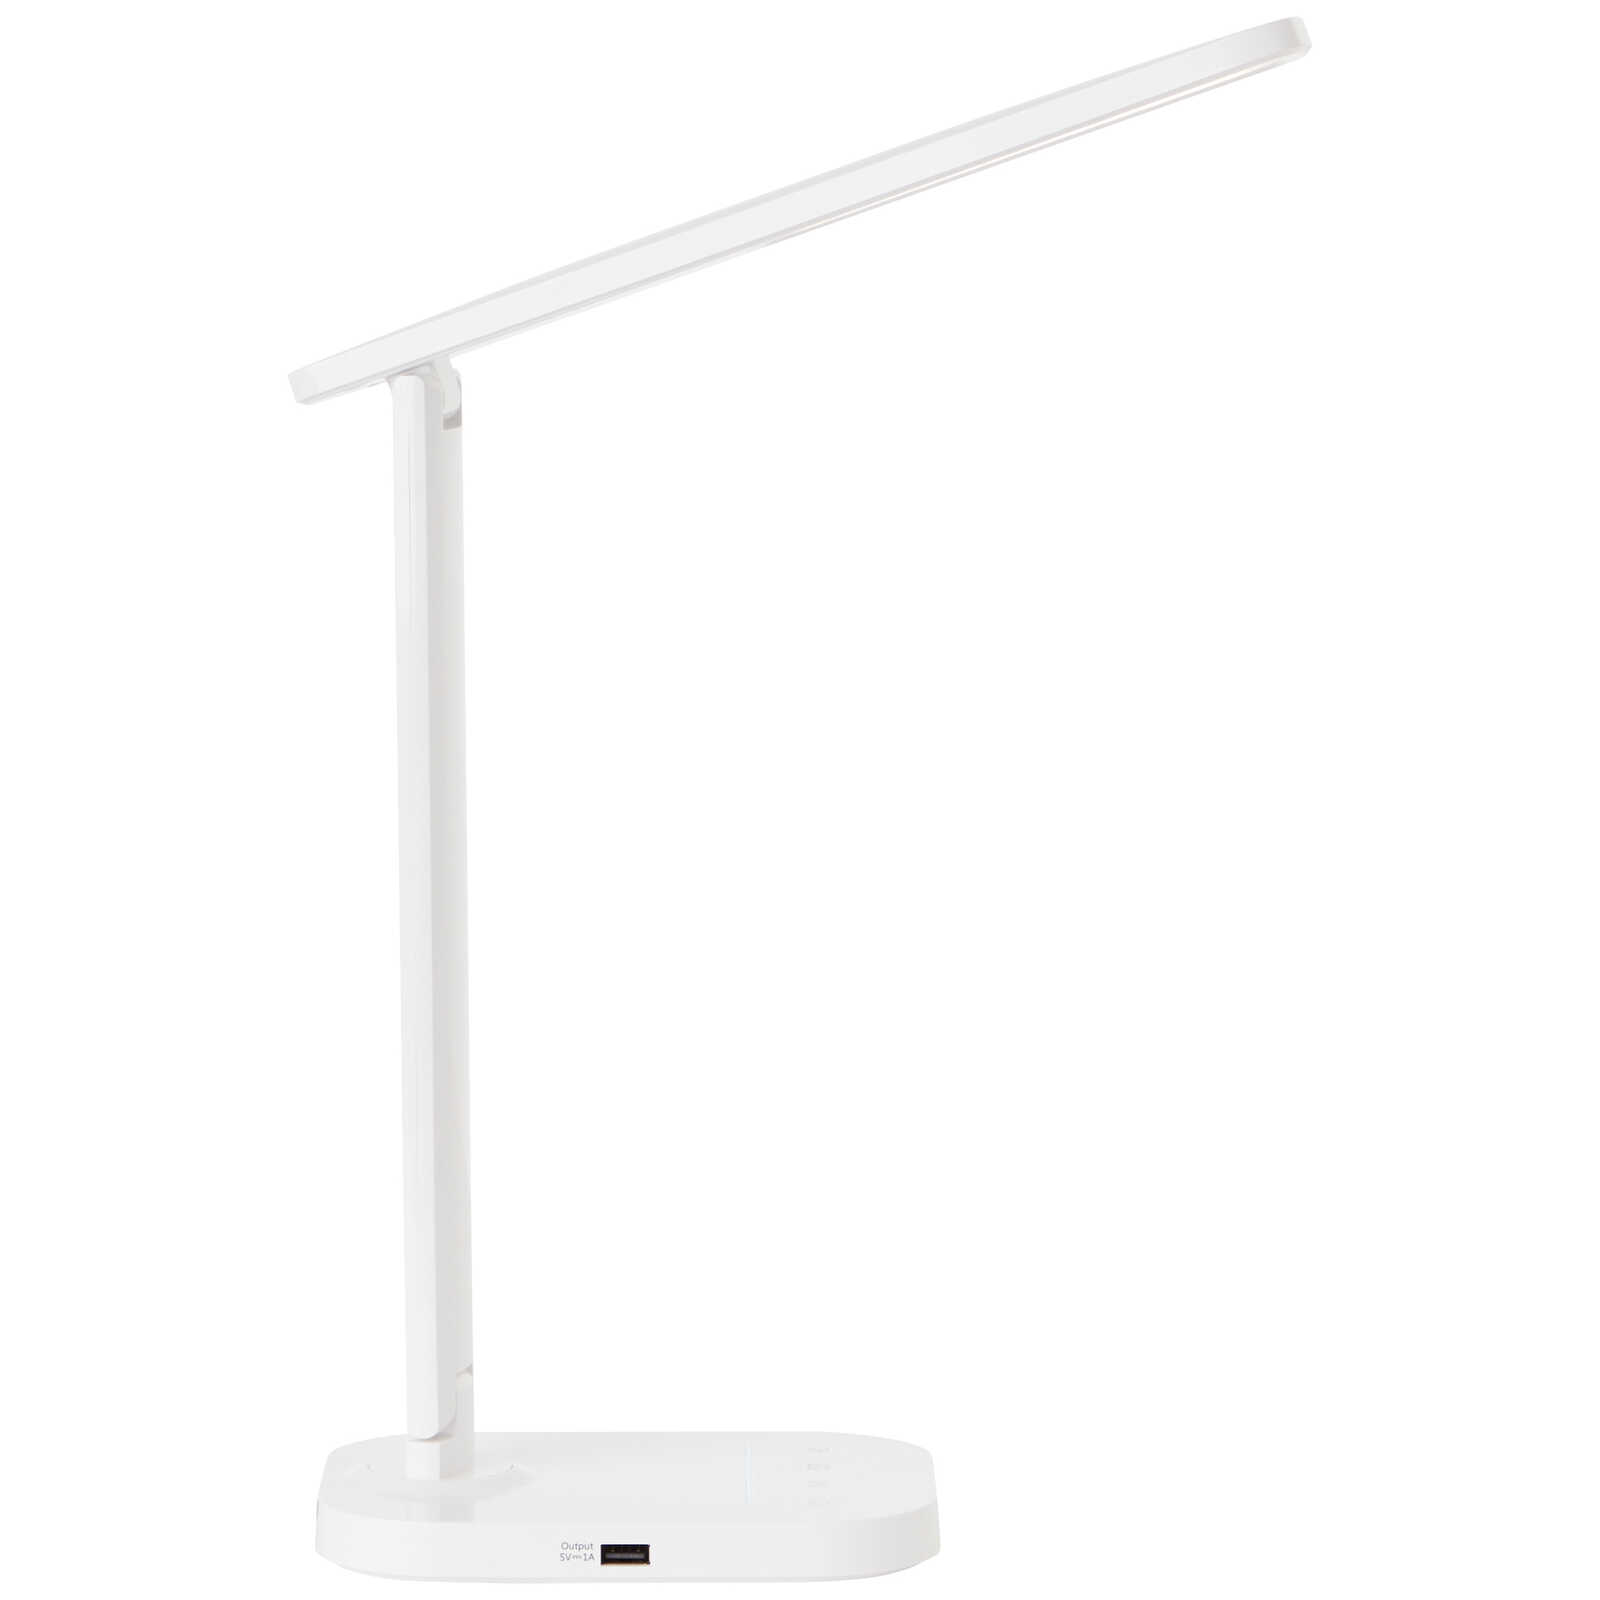             Plastic table lamp - Tabea 1 - White
        